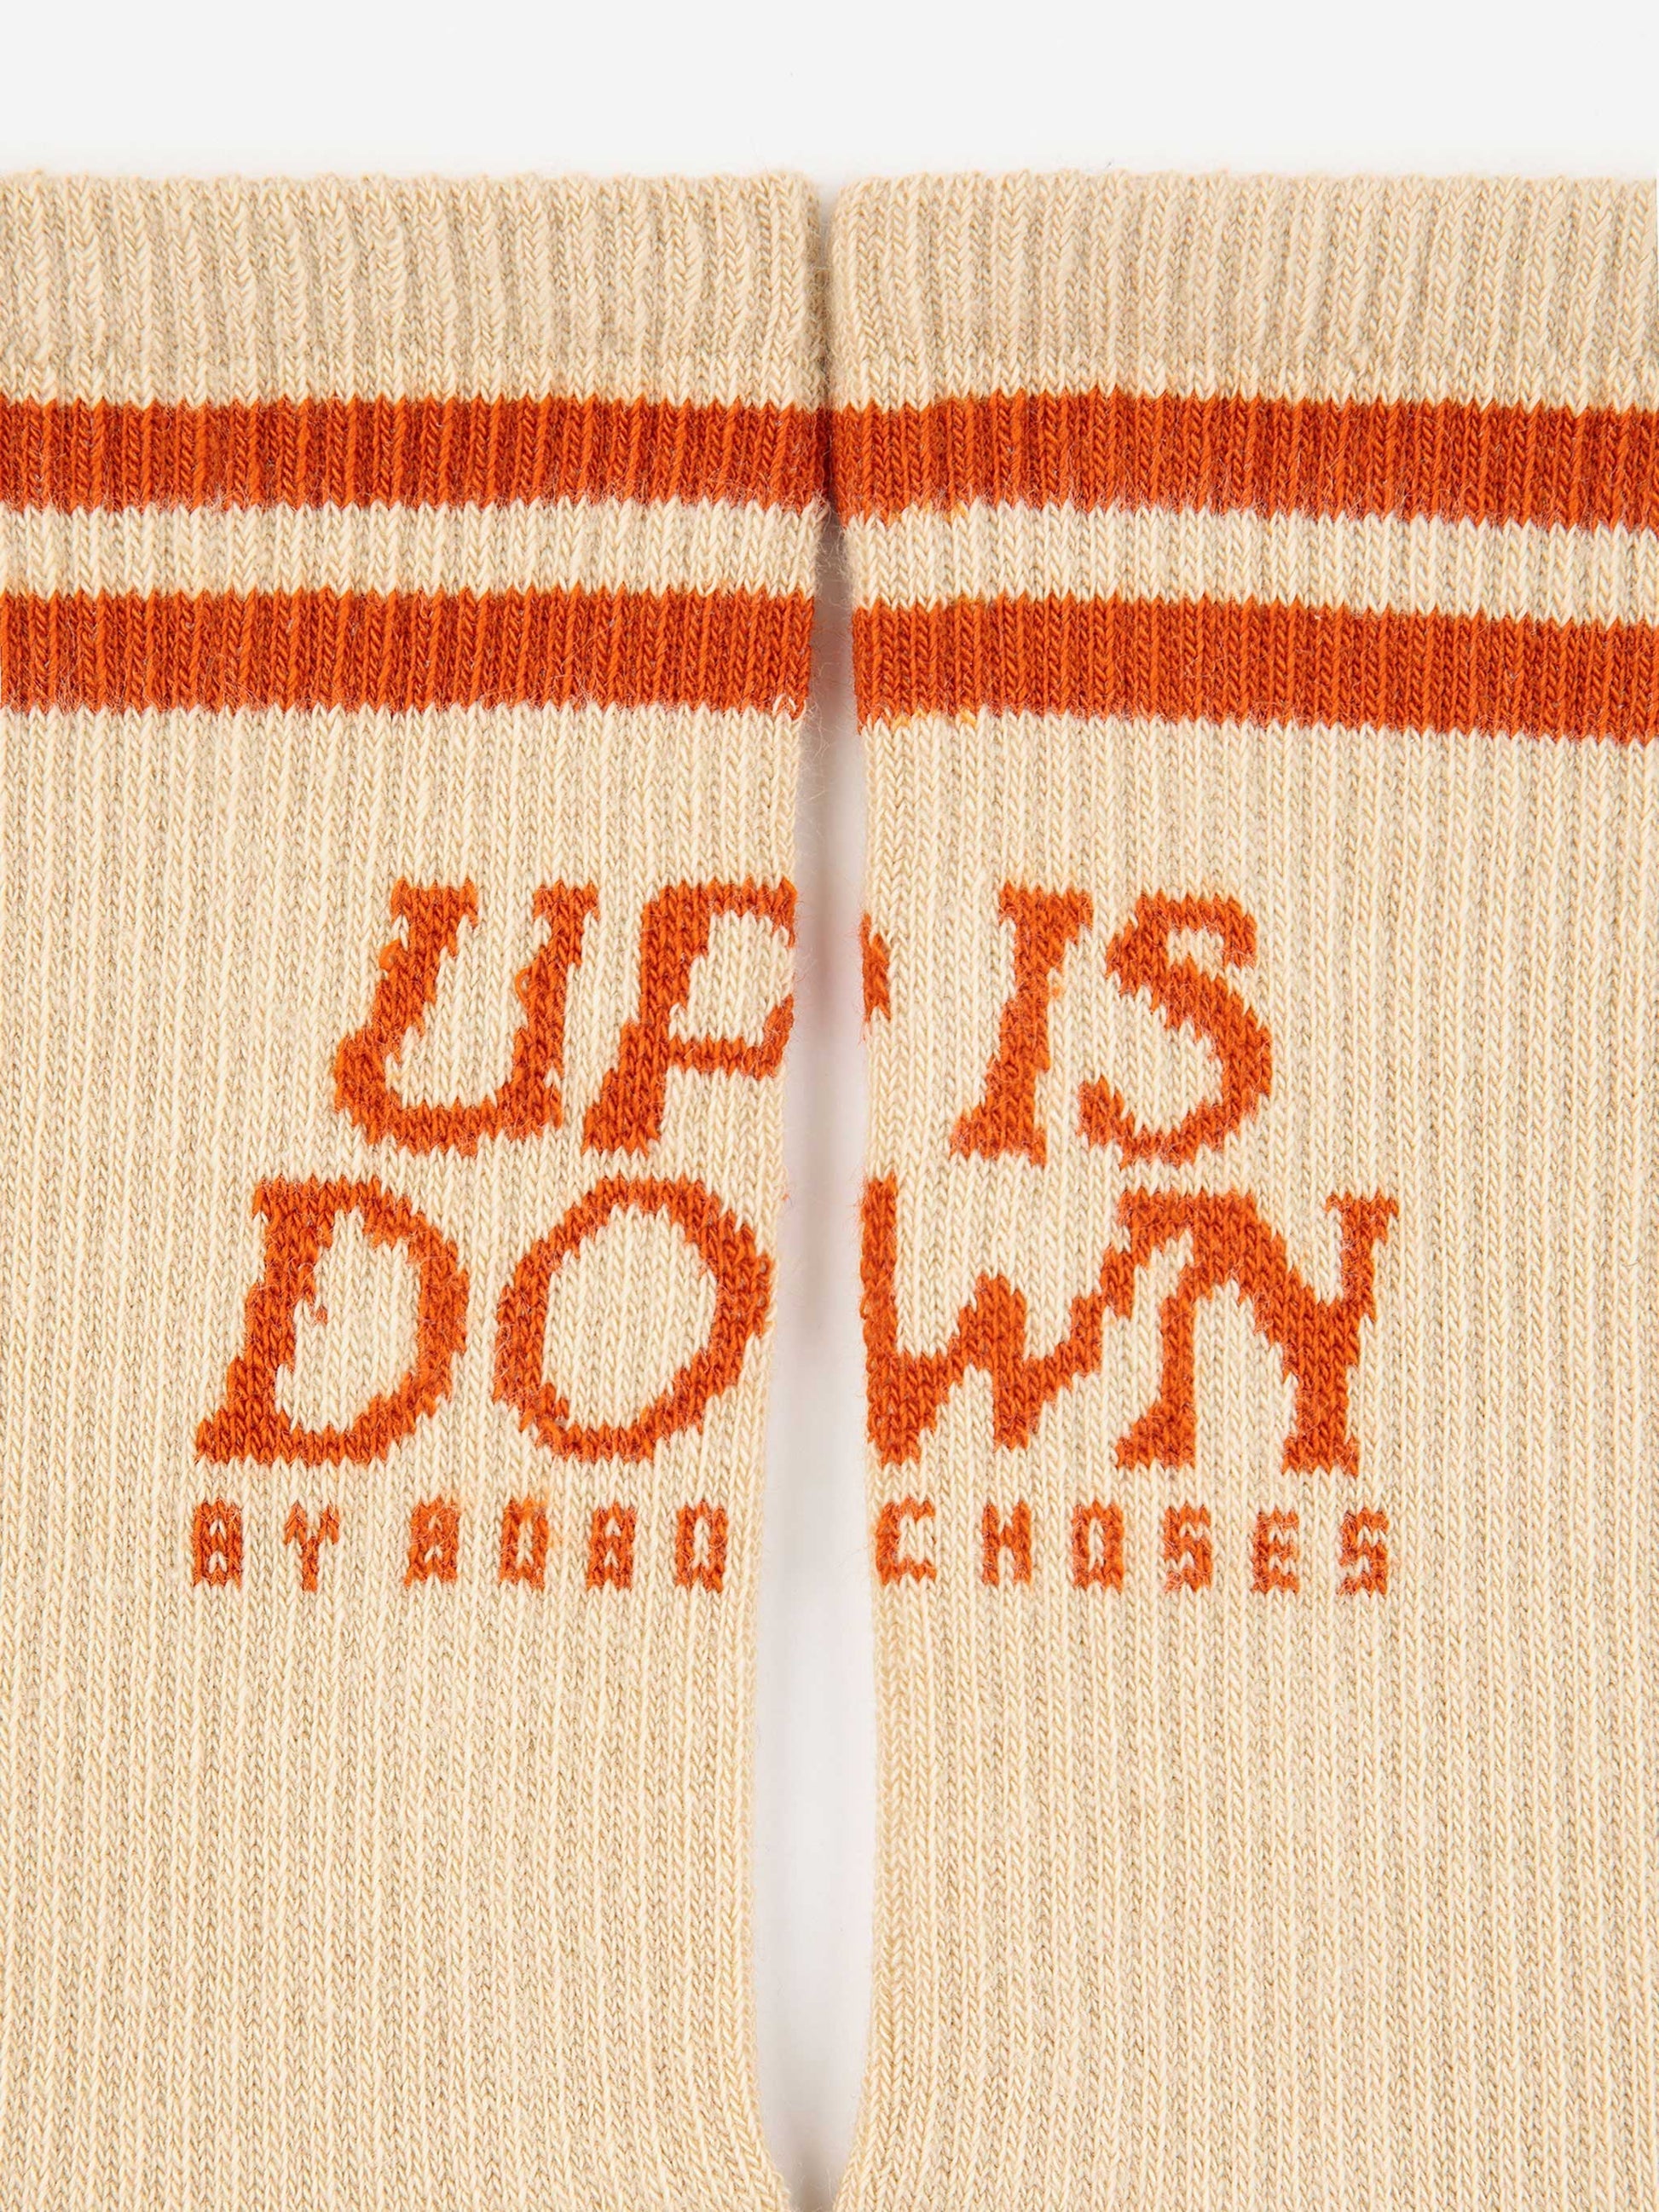 Socks Up Is Down 223ak023 200